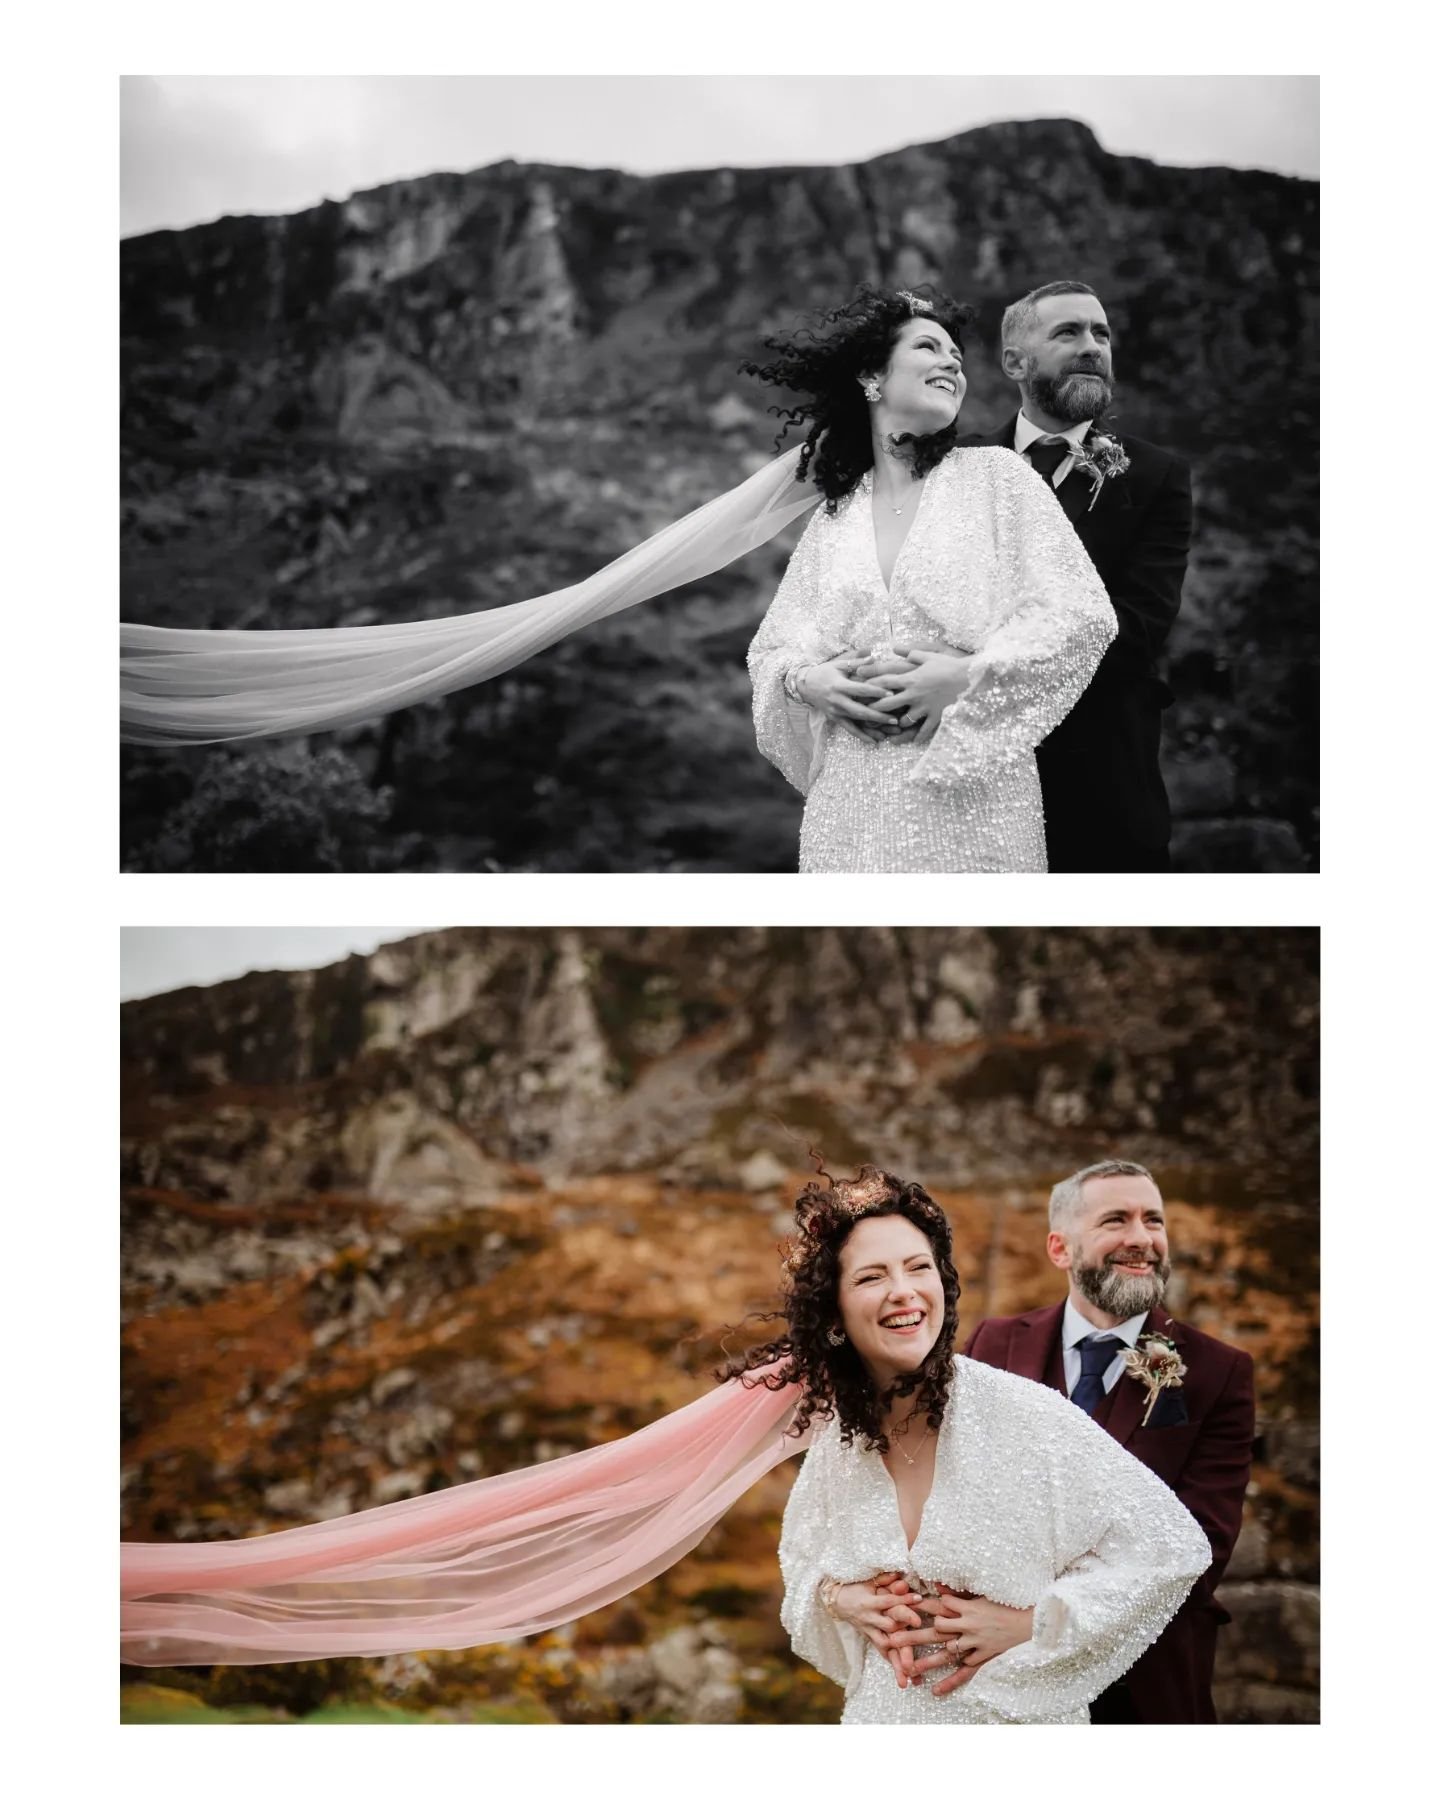 Nikki &amp; Scann 💕 
This was such a fun wedding to shoot! 
@kate_kearneys 
@killarney_wedding_cars 
dingle_druid 

#weddingphotography #irishweddingphotographer